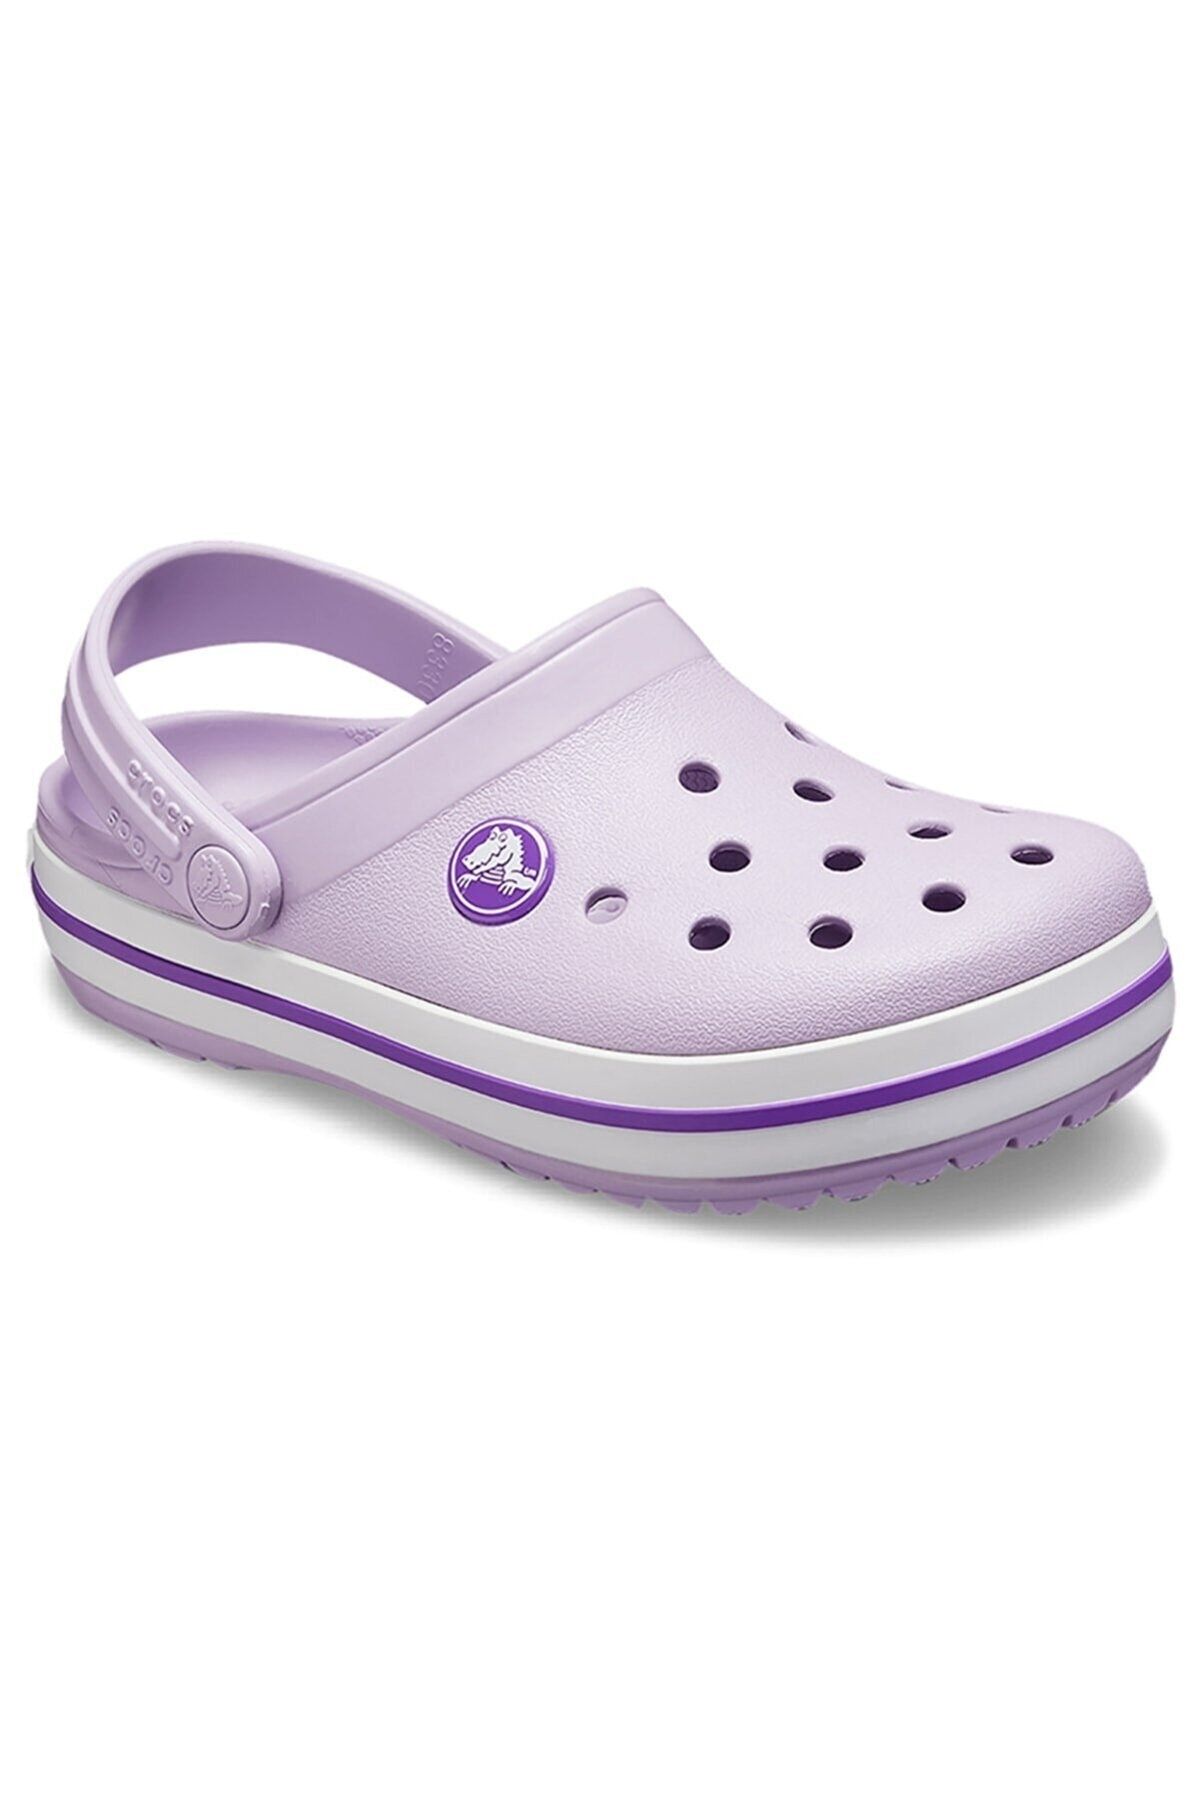 Crocs Crocband Clog Kız Çocuk Terlik - 207006